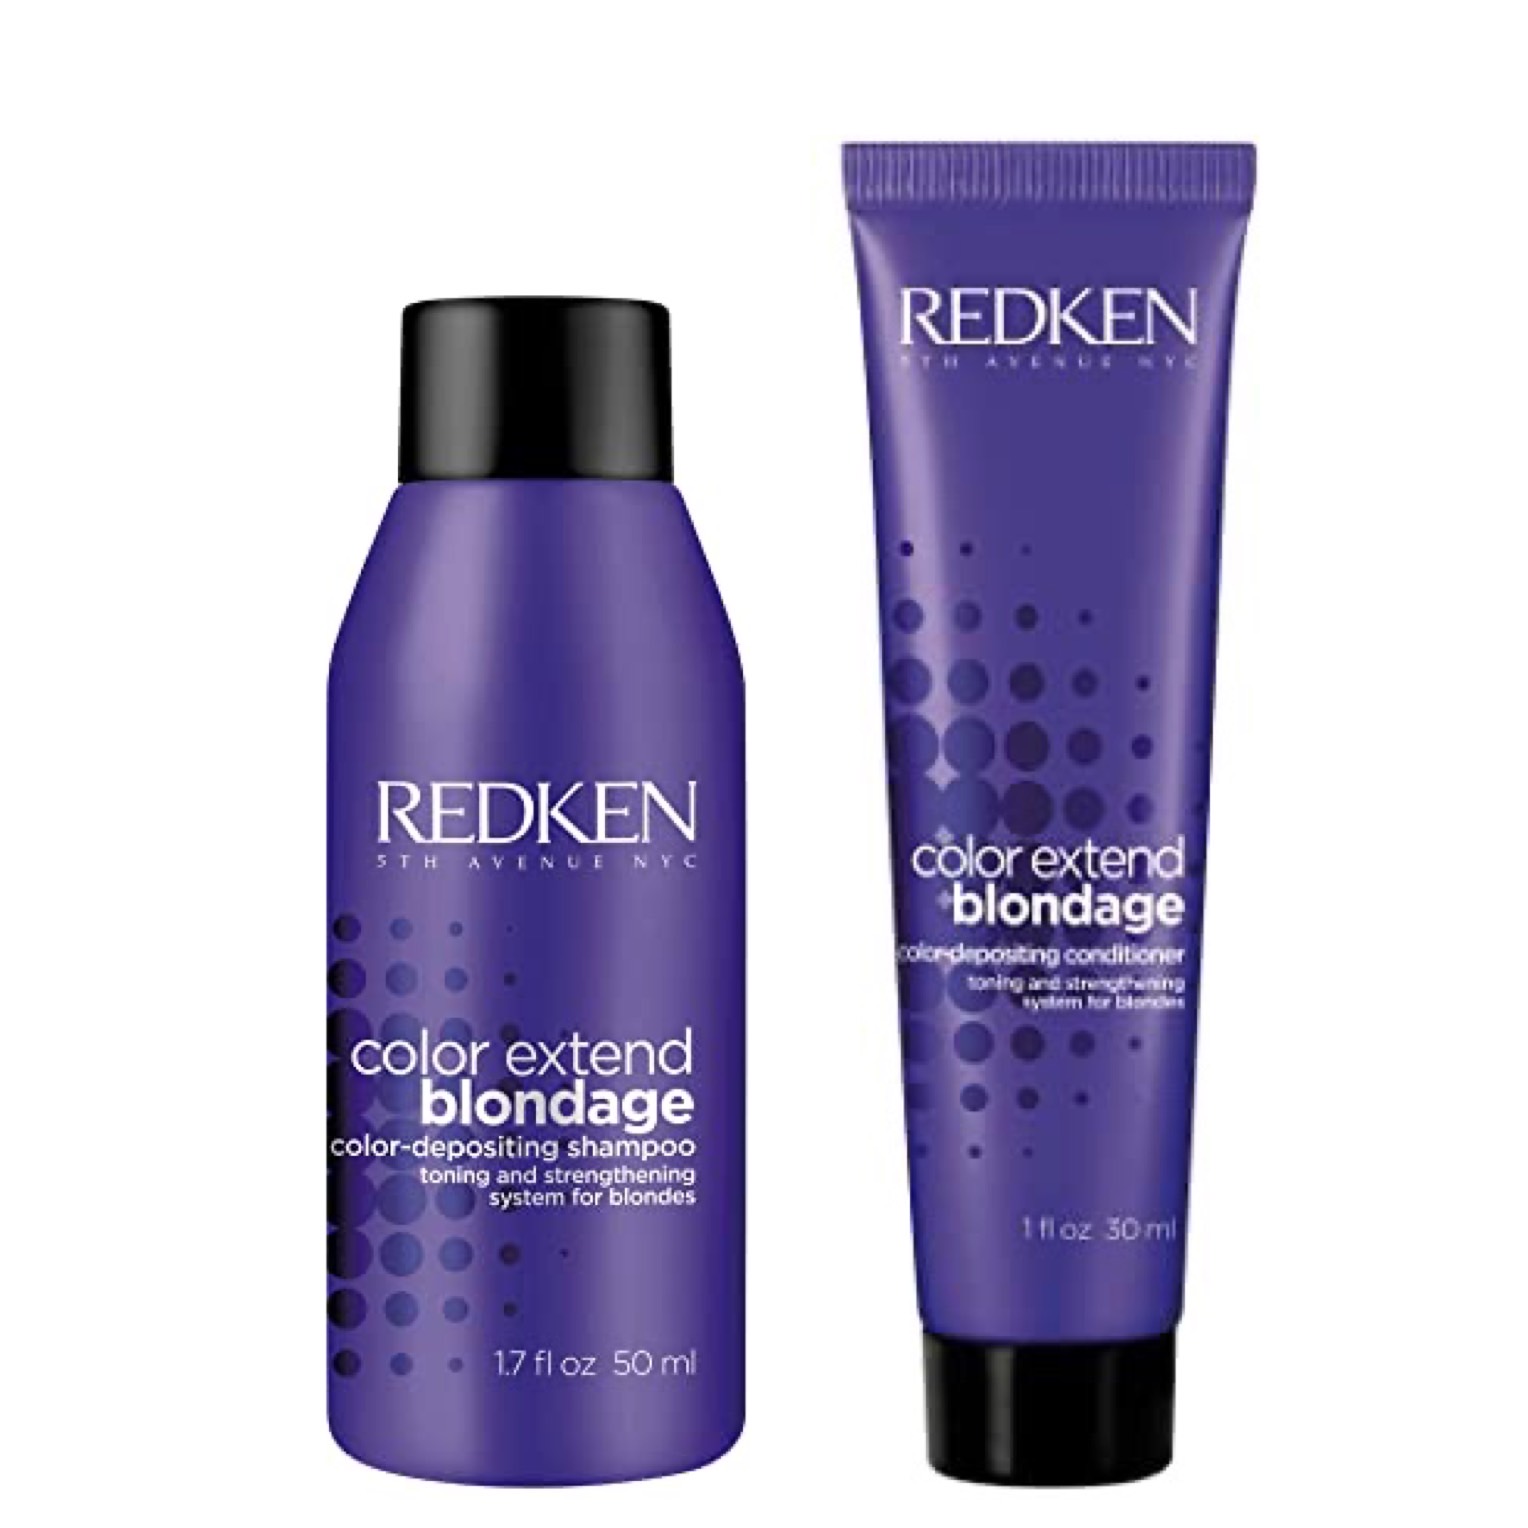 Redken Color Extend Blondage Probierset Mini - Shampoo 50ml + Conditioner 30ml